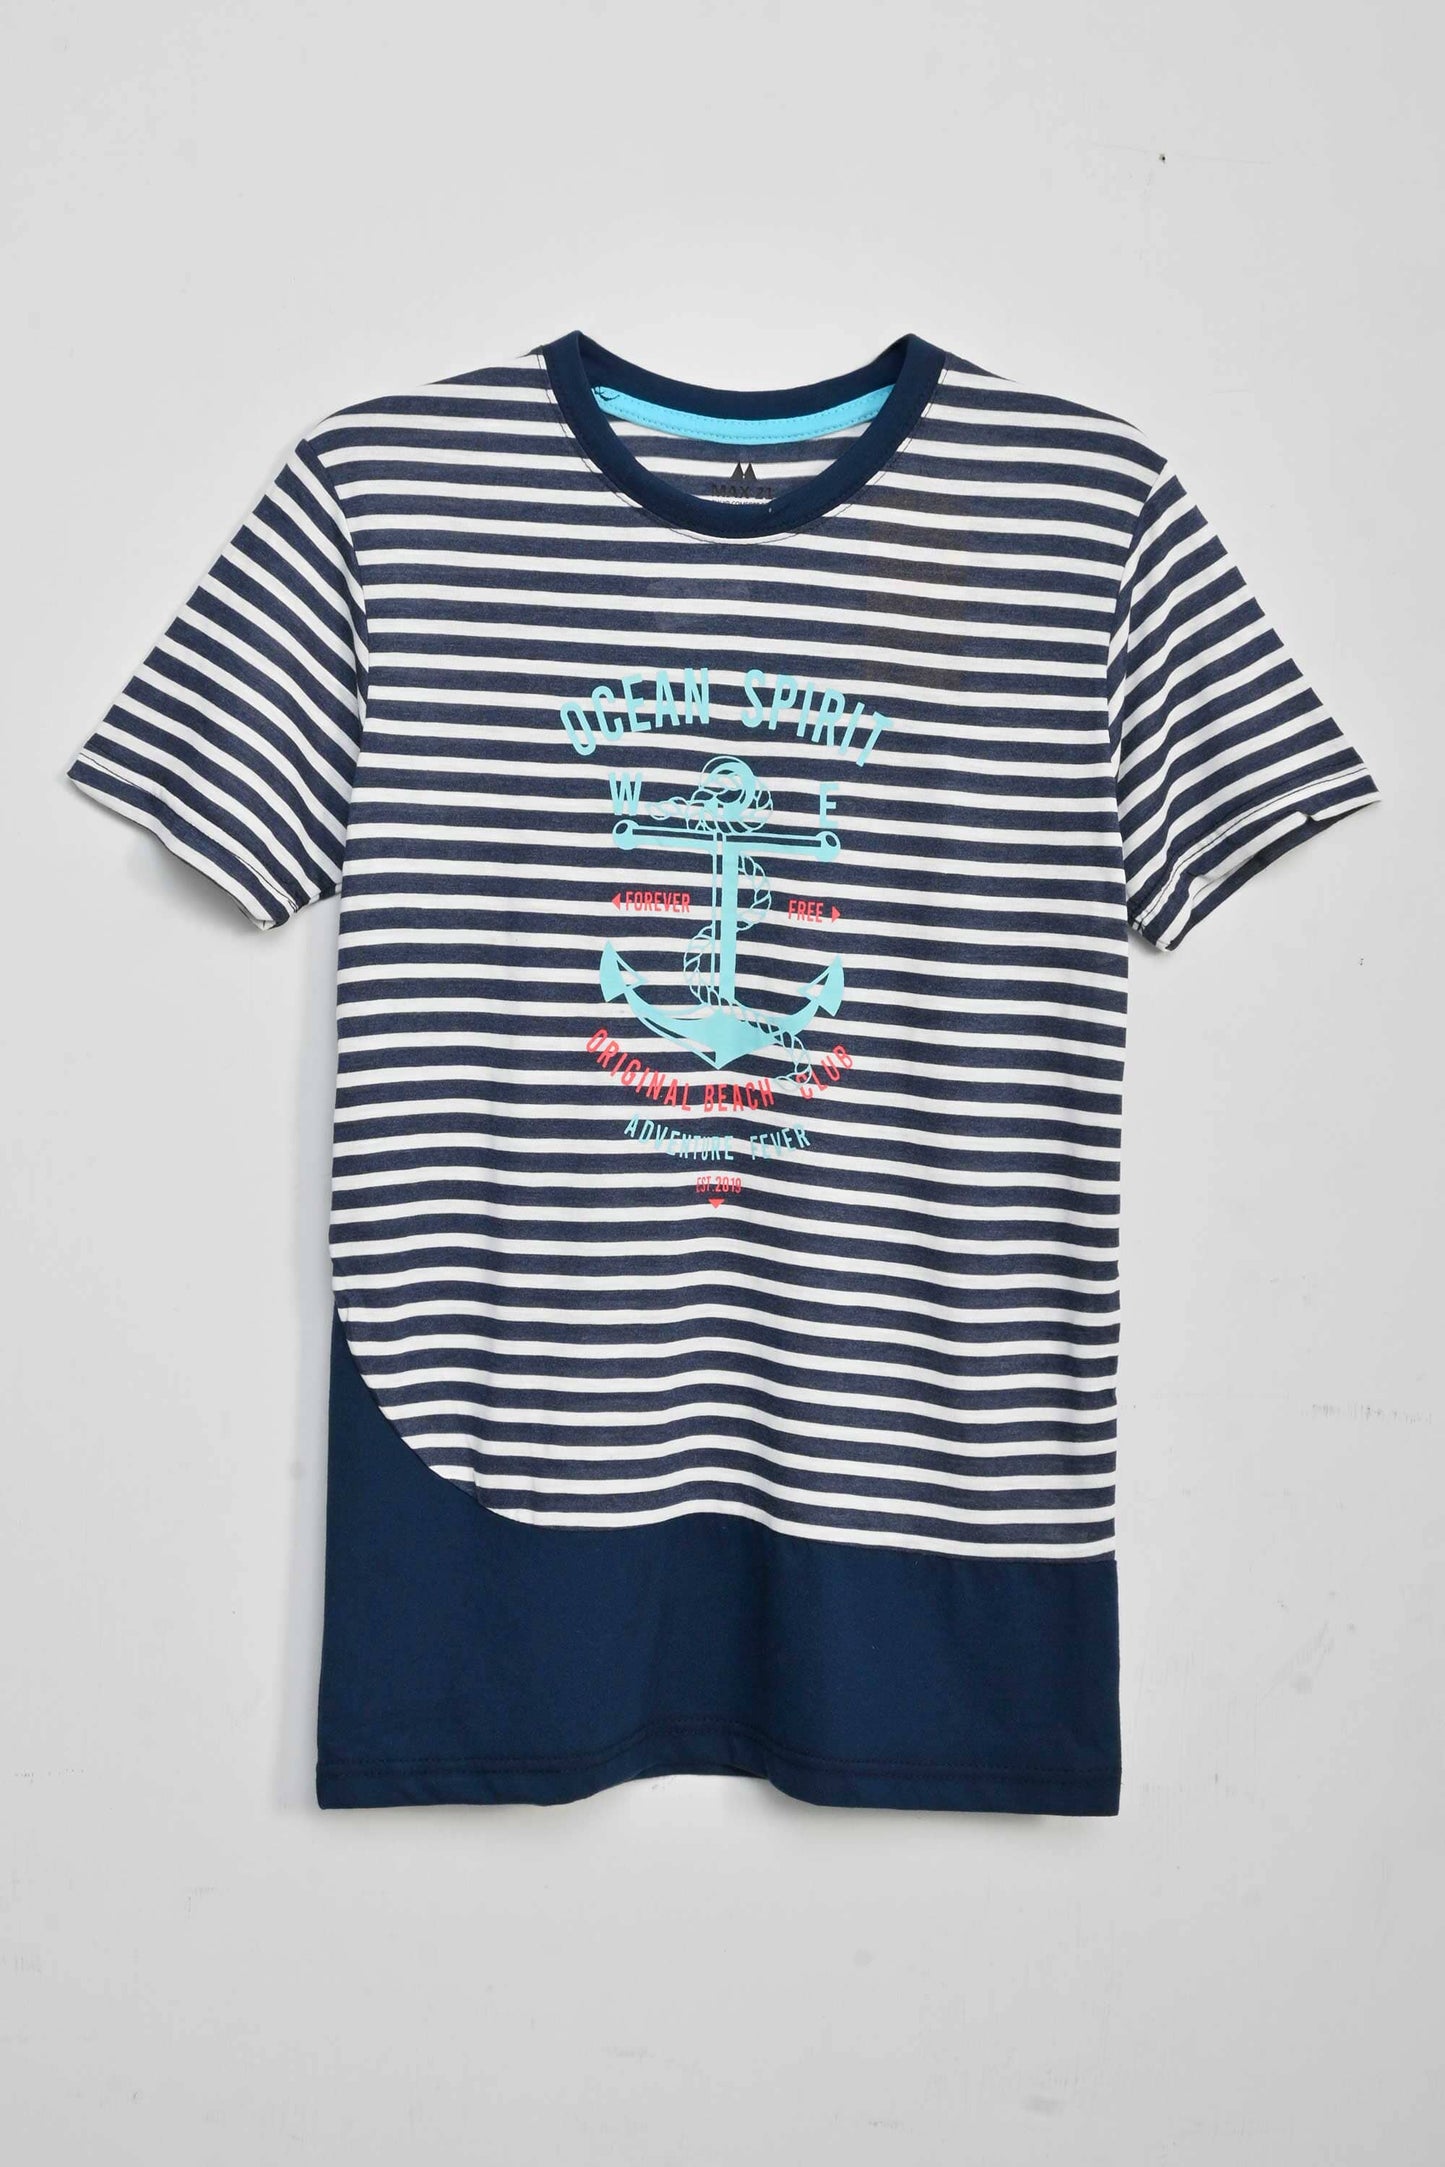 Max 21 Men's Ocean Spirit Printed Tee Shirt Men's Tee Shirt SZK 